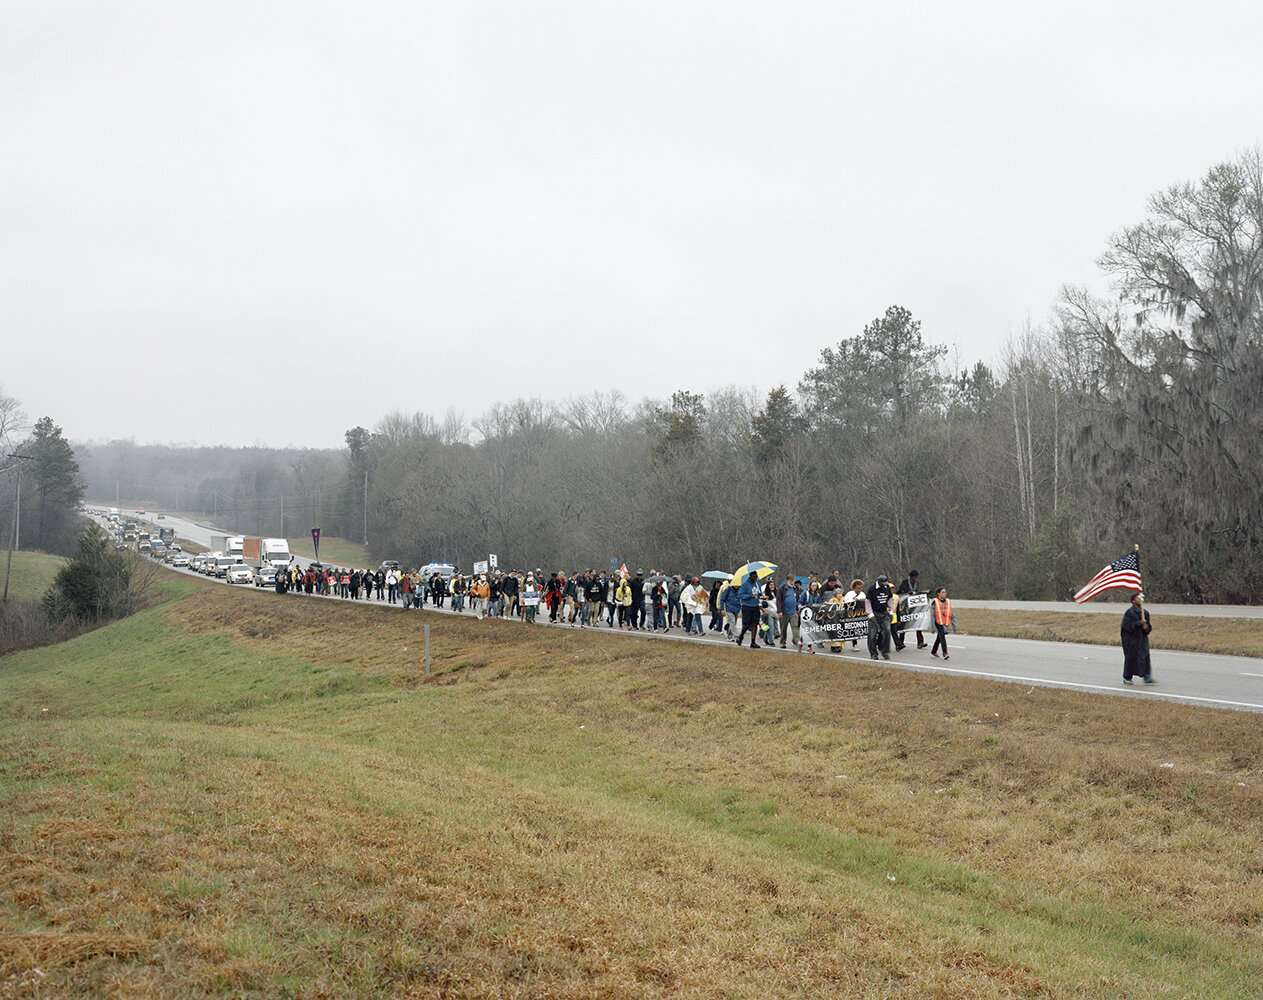  Joshua Dudley Greer,  U.S. Highway 80, between Selma and Montgomery, Alabama,  2015  